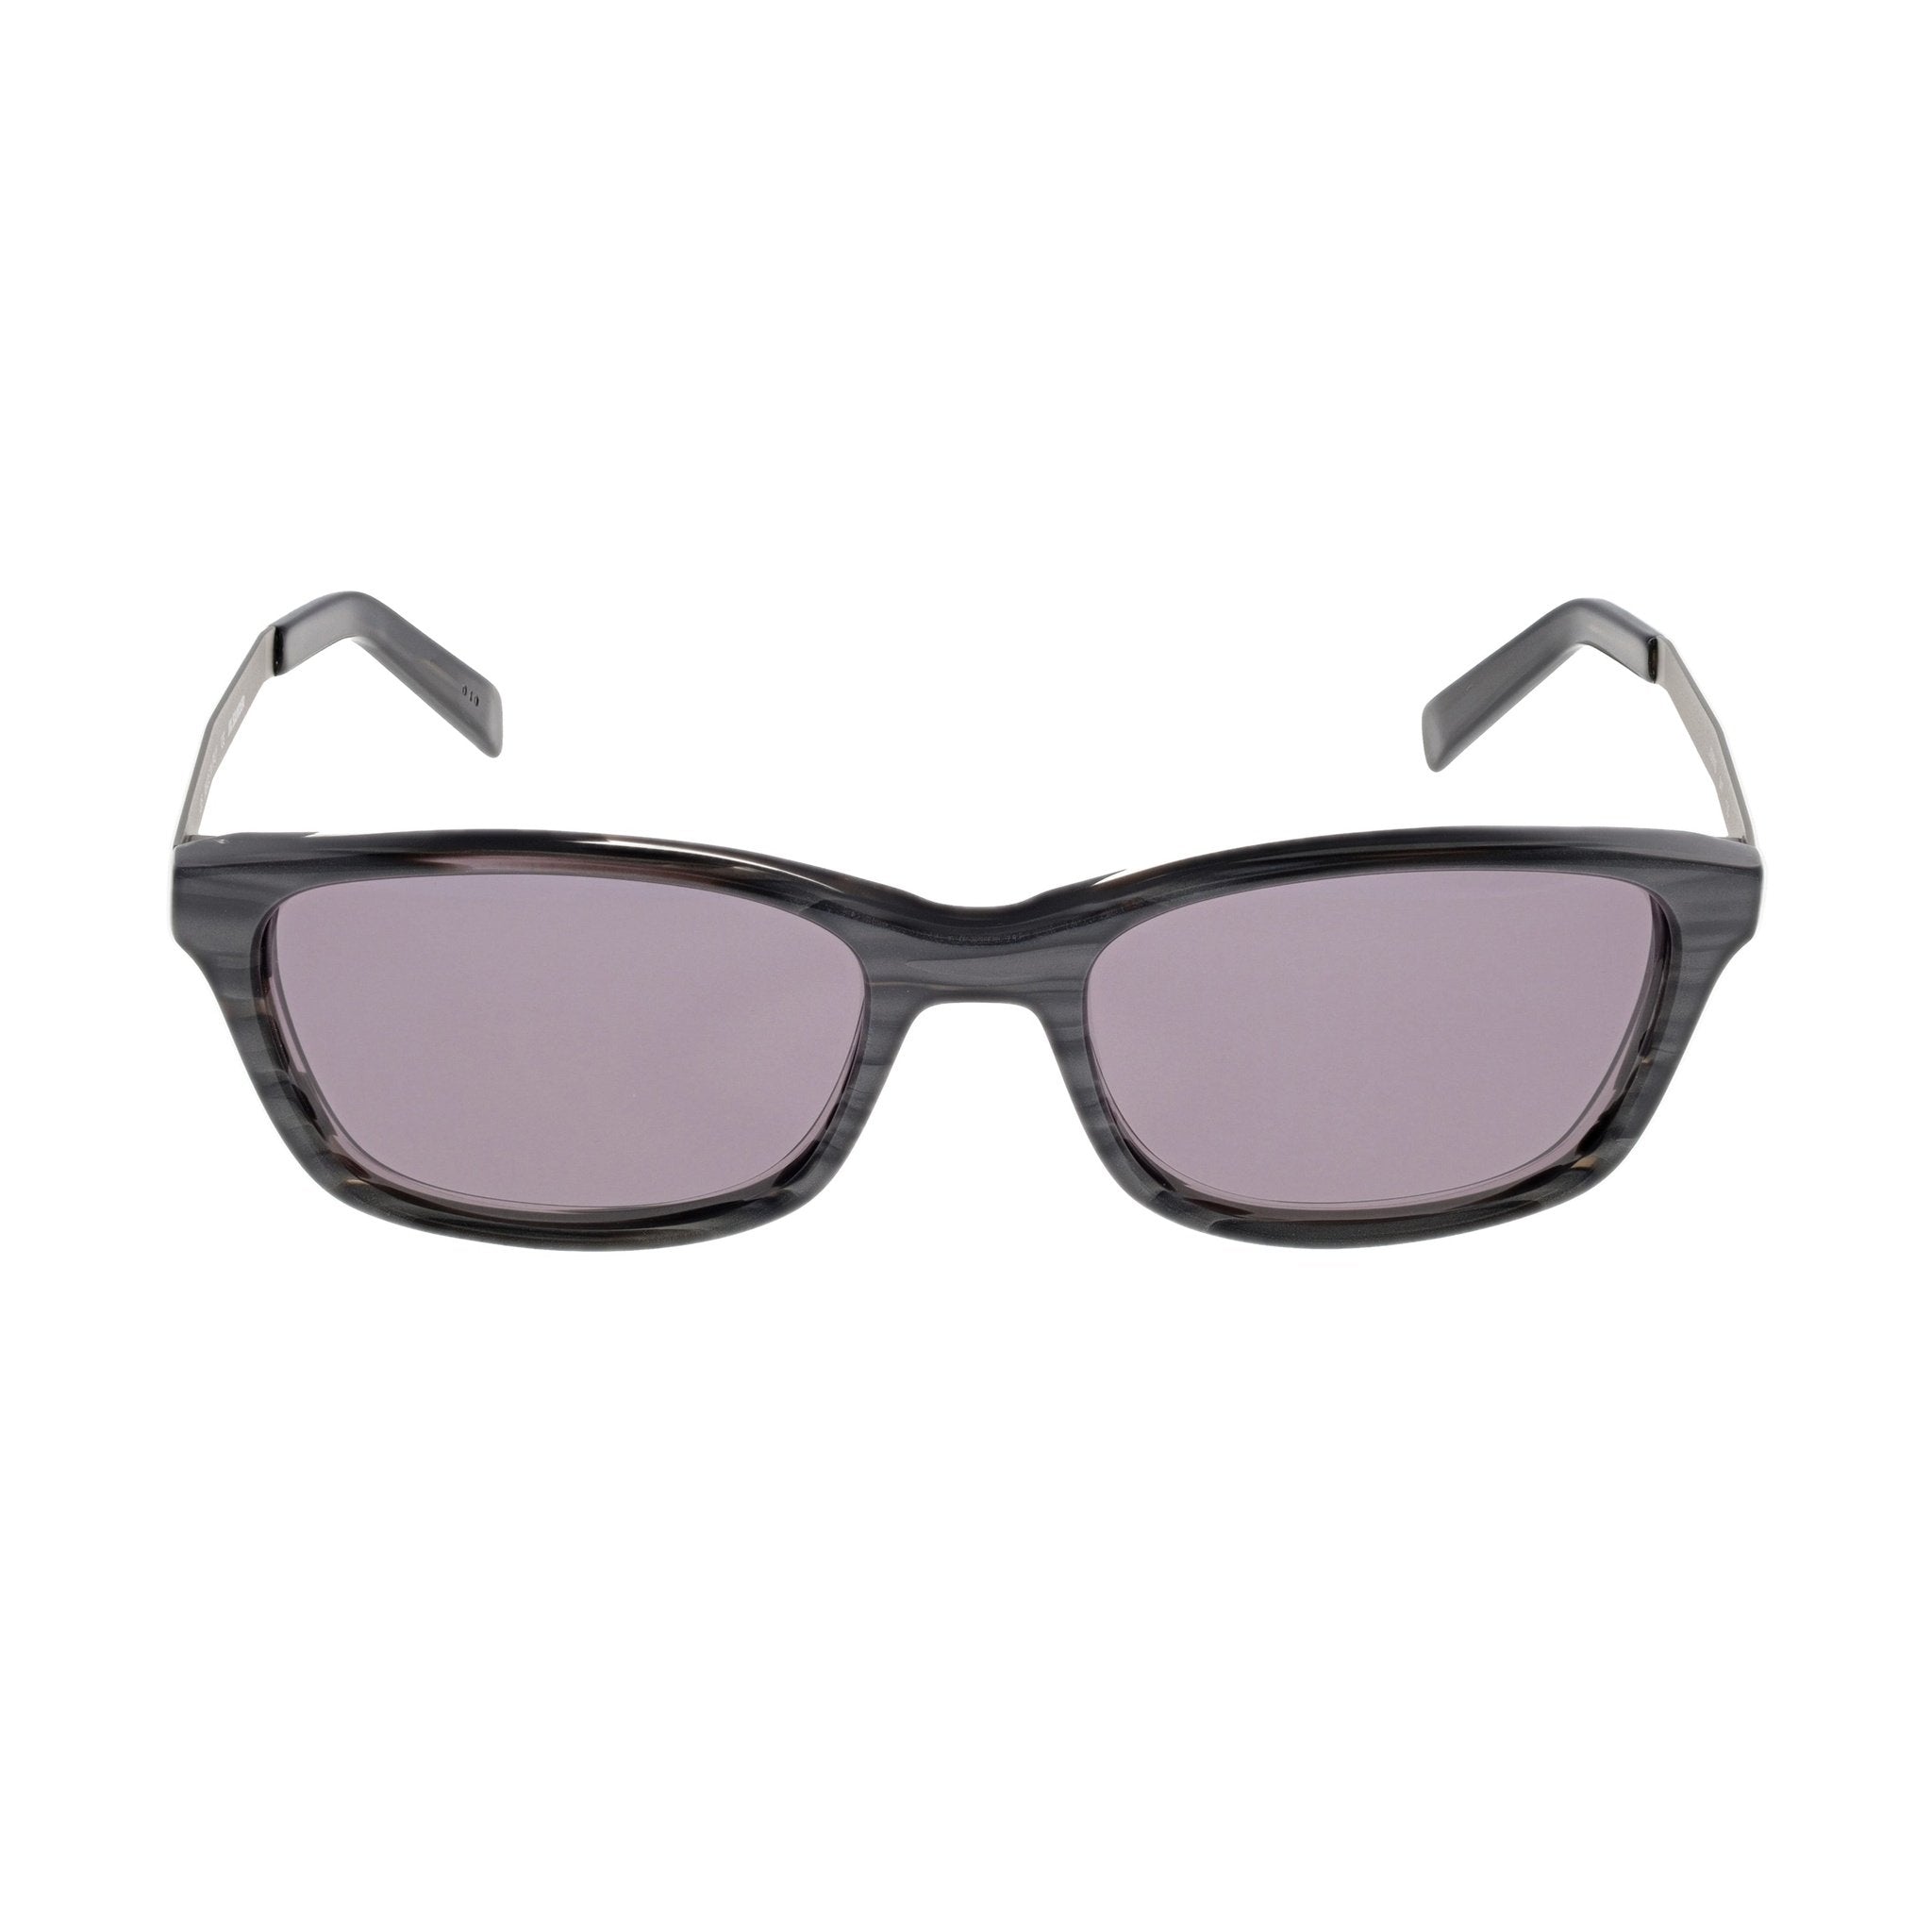 Jil Sander Sunglasses - JS651S - Striped Gray